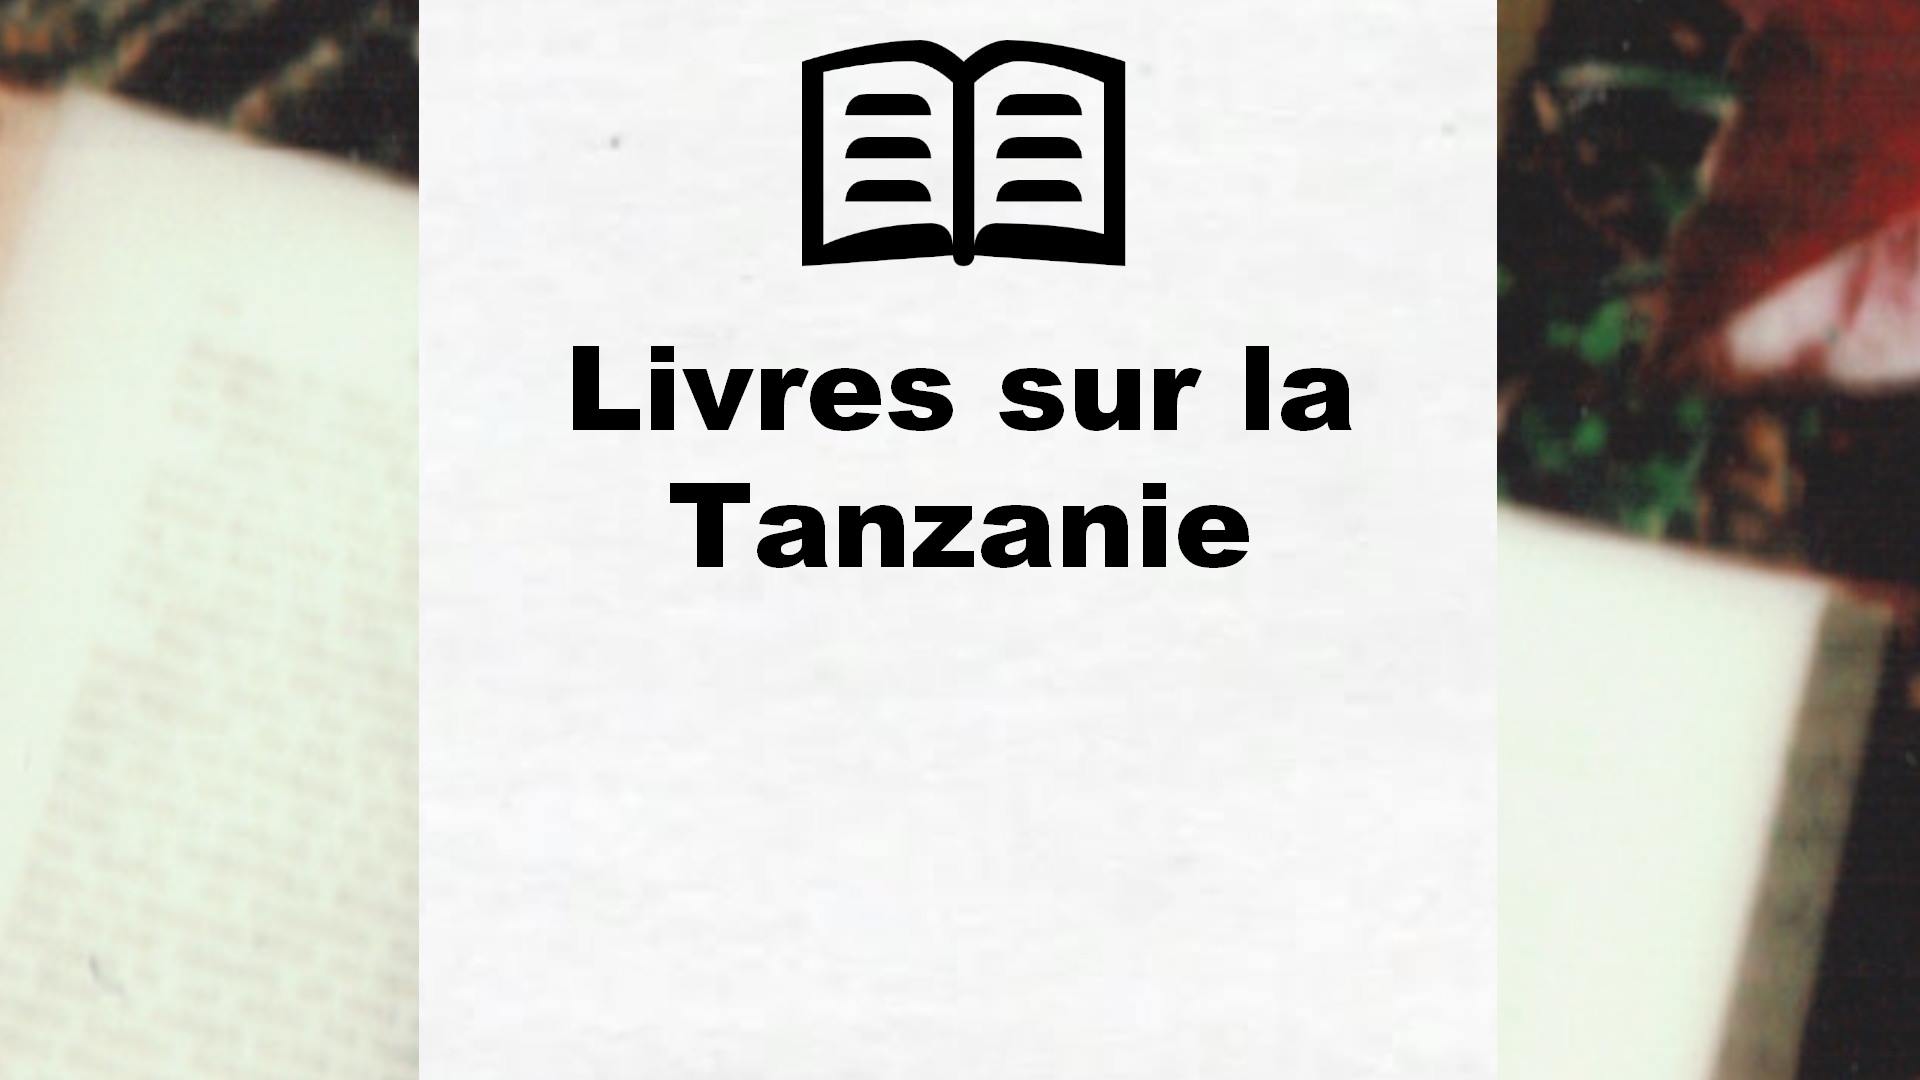 Livres sur la Tanzanie